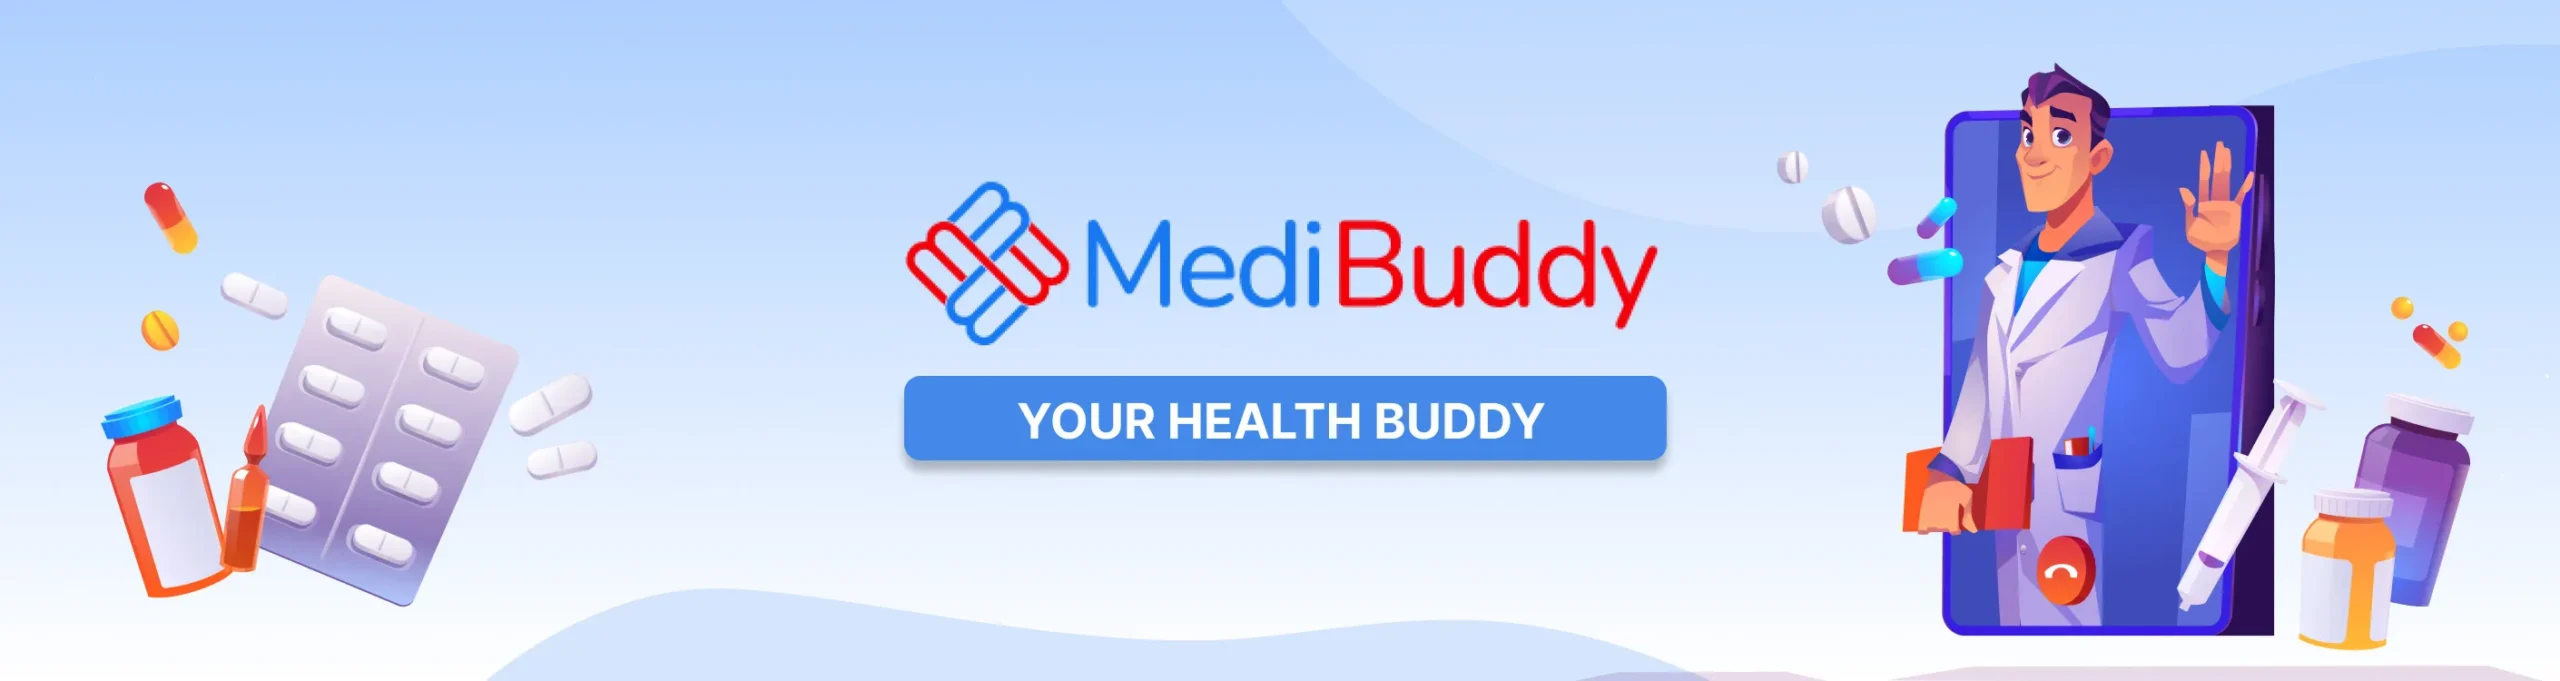 Medi Buddy logo